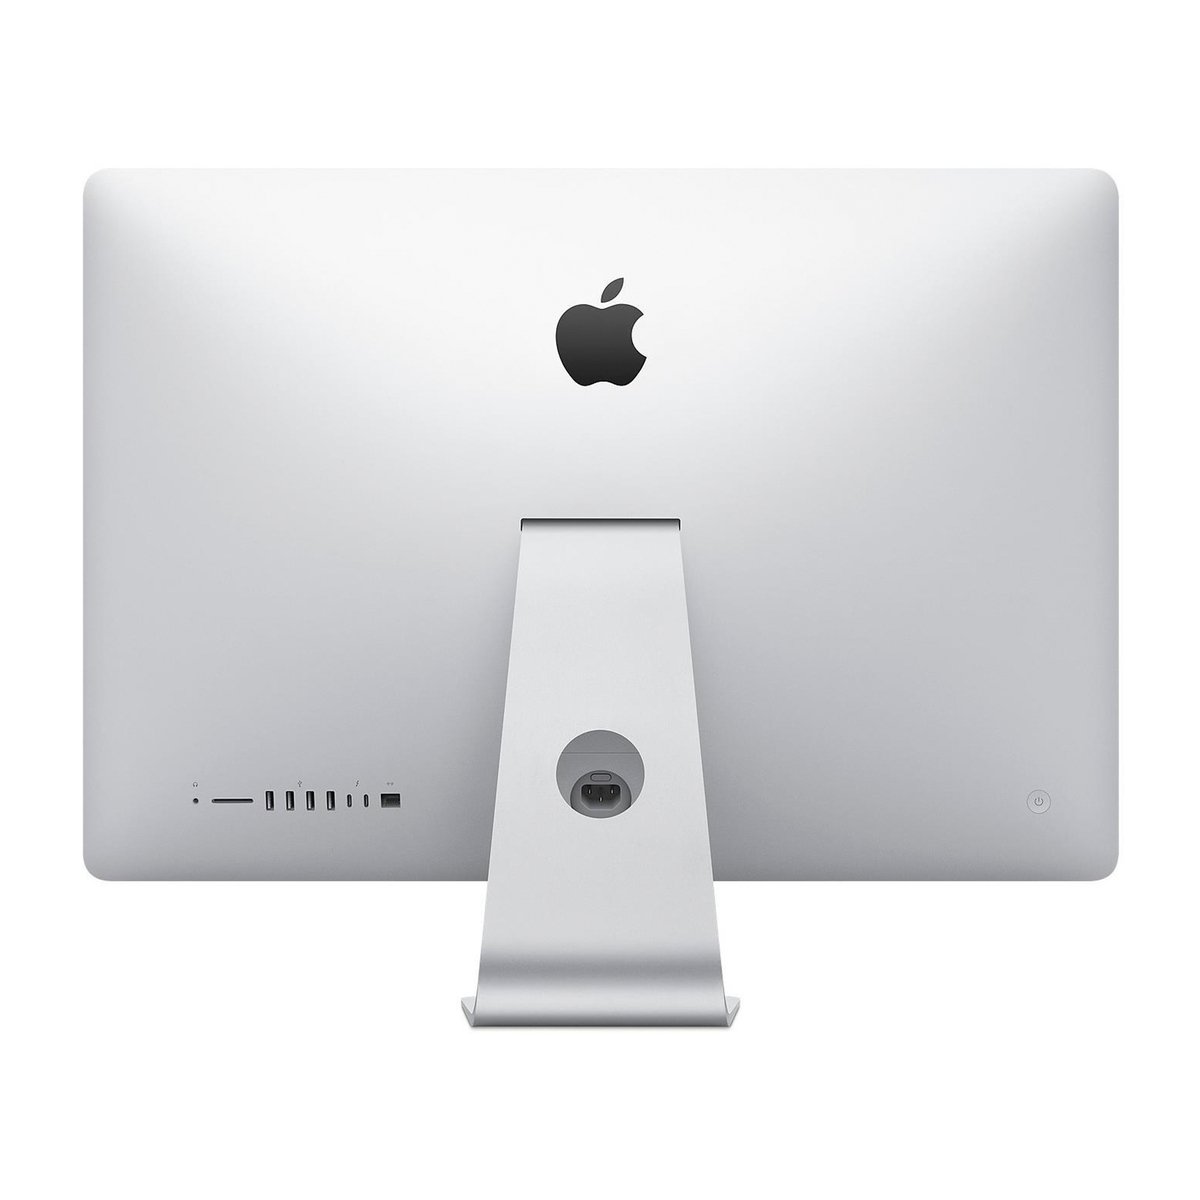 Apple iMac Desktop MXWT2B/A,Intel Core i5,8GB RAM,256GB SSD,Radeon Pro Graphics,27" Retina 5K Display,Mac OS,English Keyboard